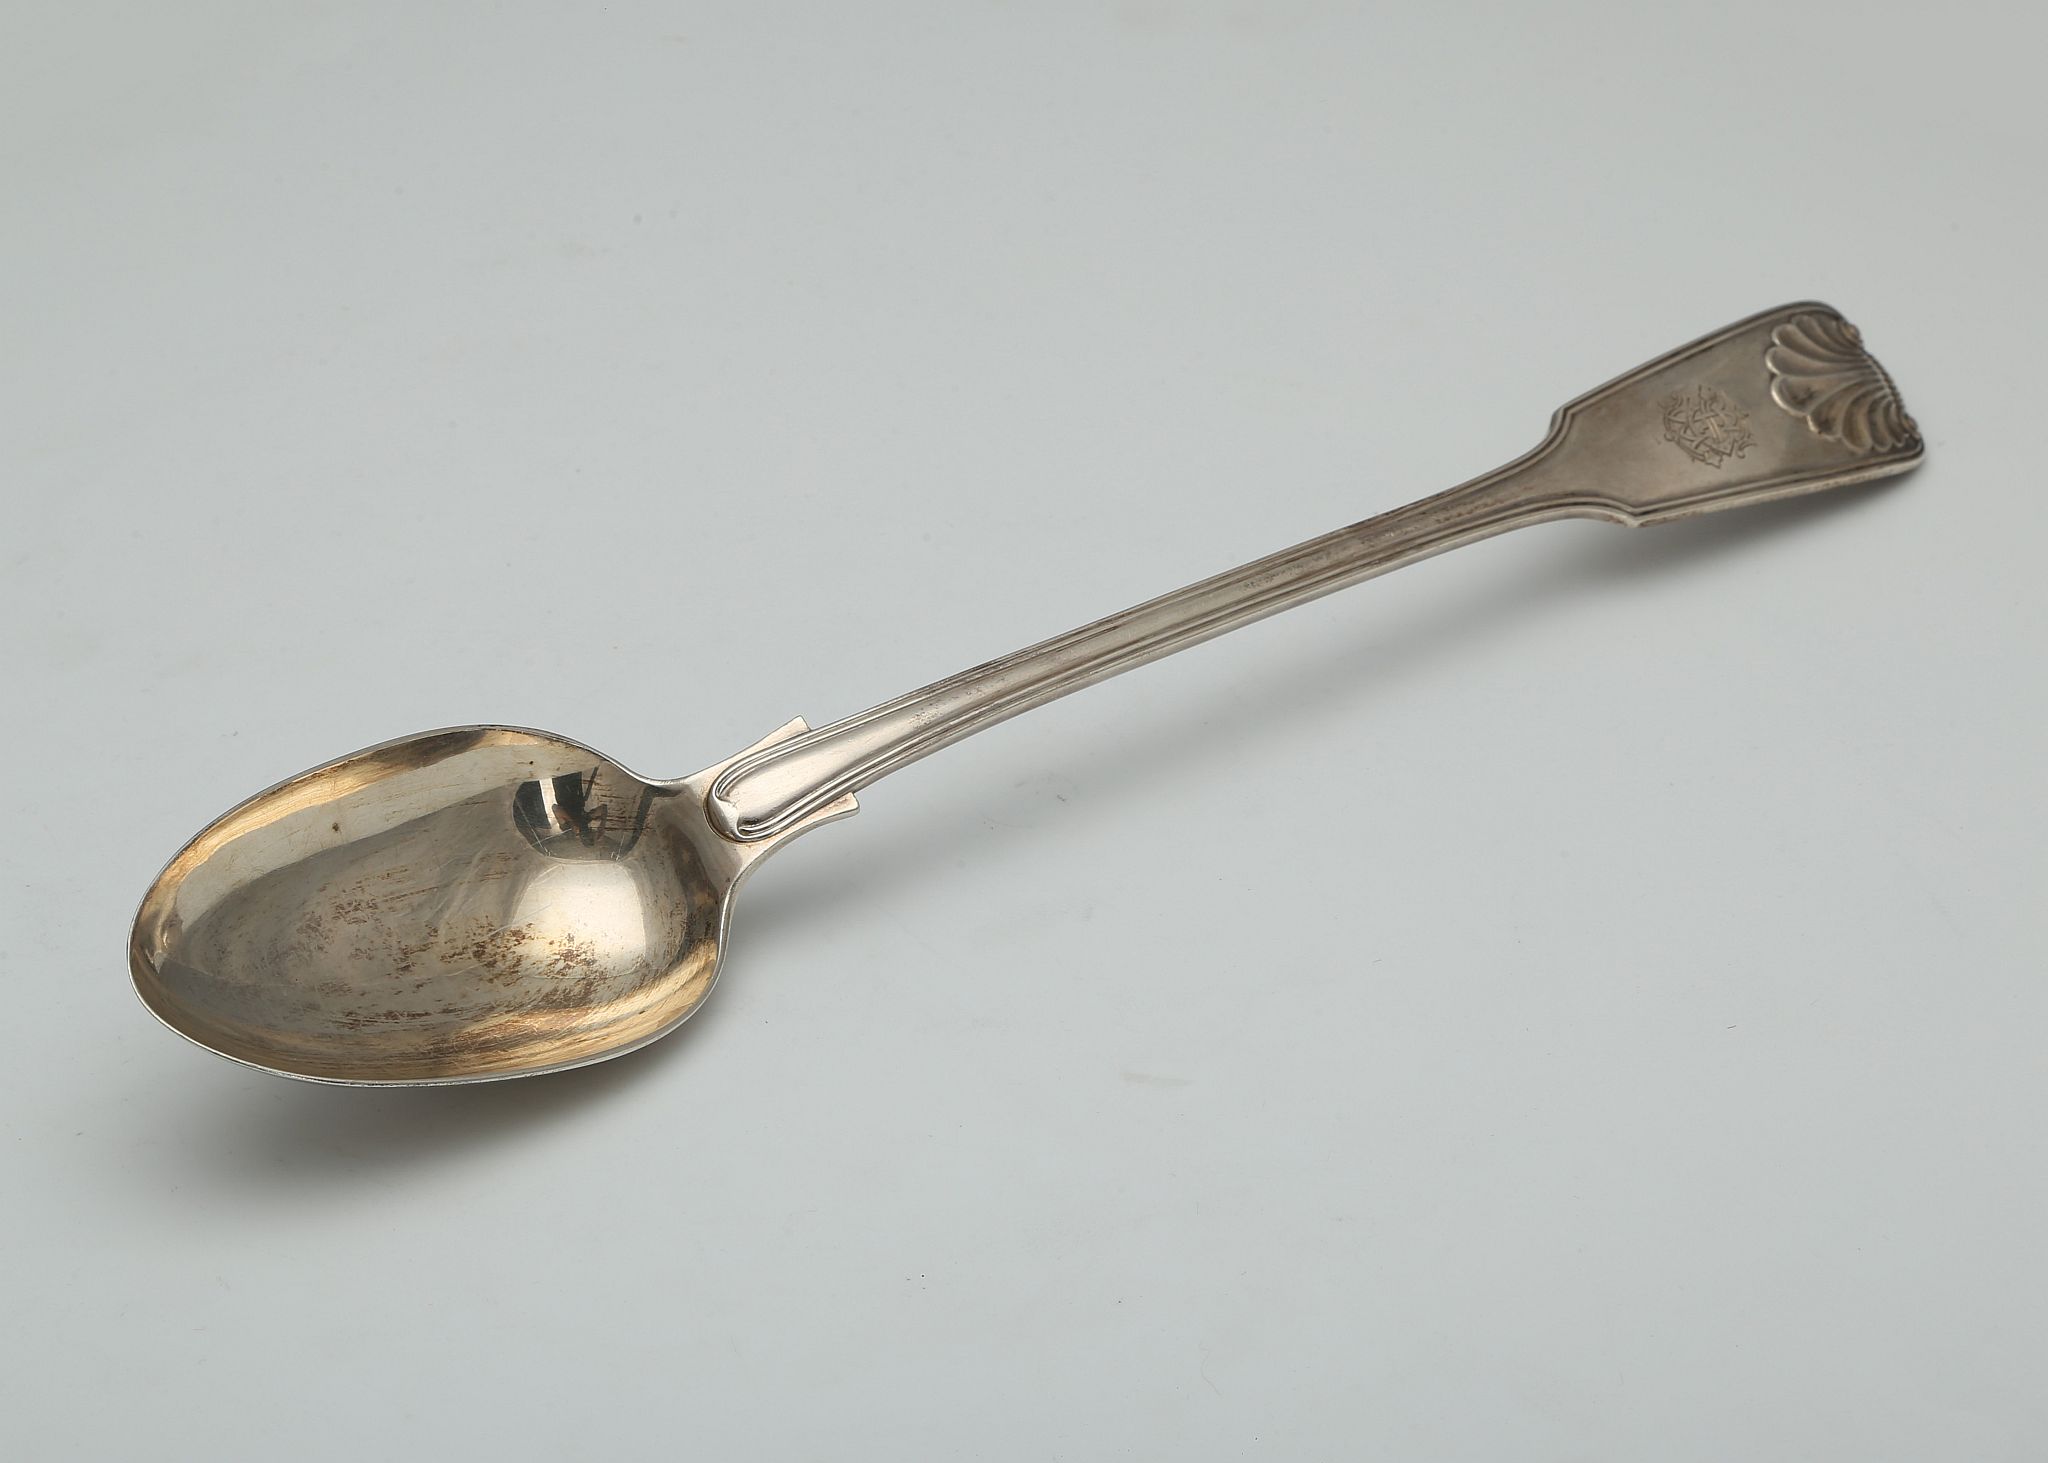 Antique Victorian Sterling Silver basting / stuffing spoon by Elkington & Co Ltd, Birmingham 1890.